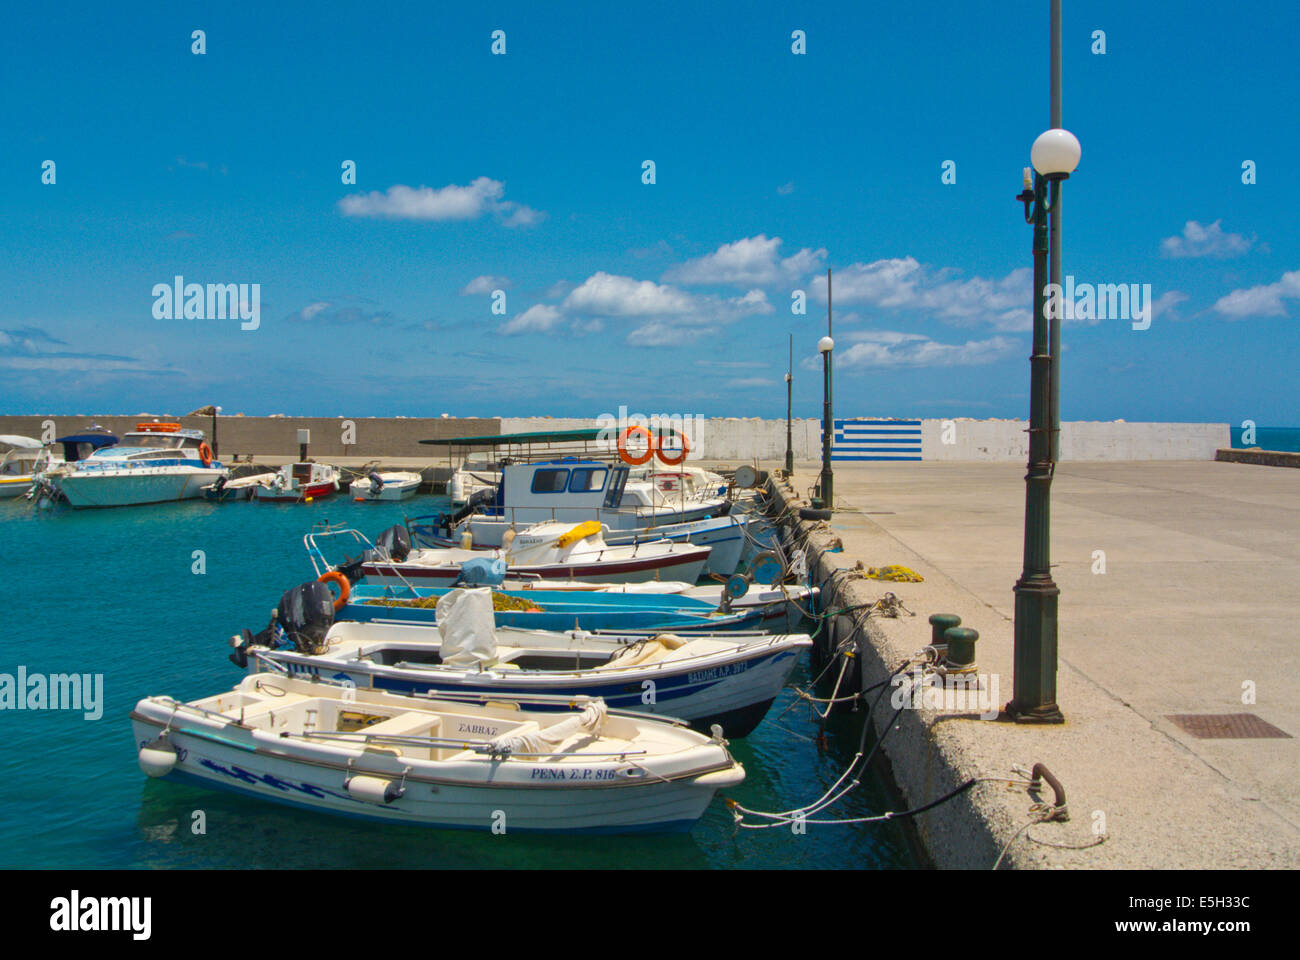 Boats in port, Faliraki resort, Rhodes island, Dodecanese islands, Greece, Europe Stock Photo